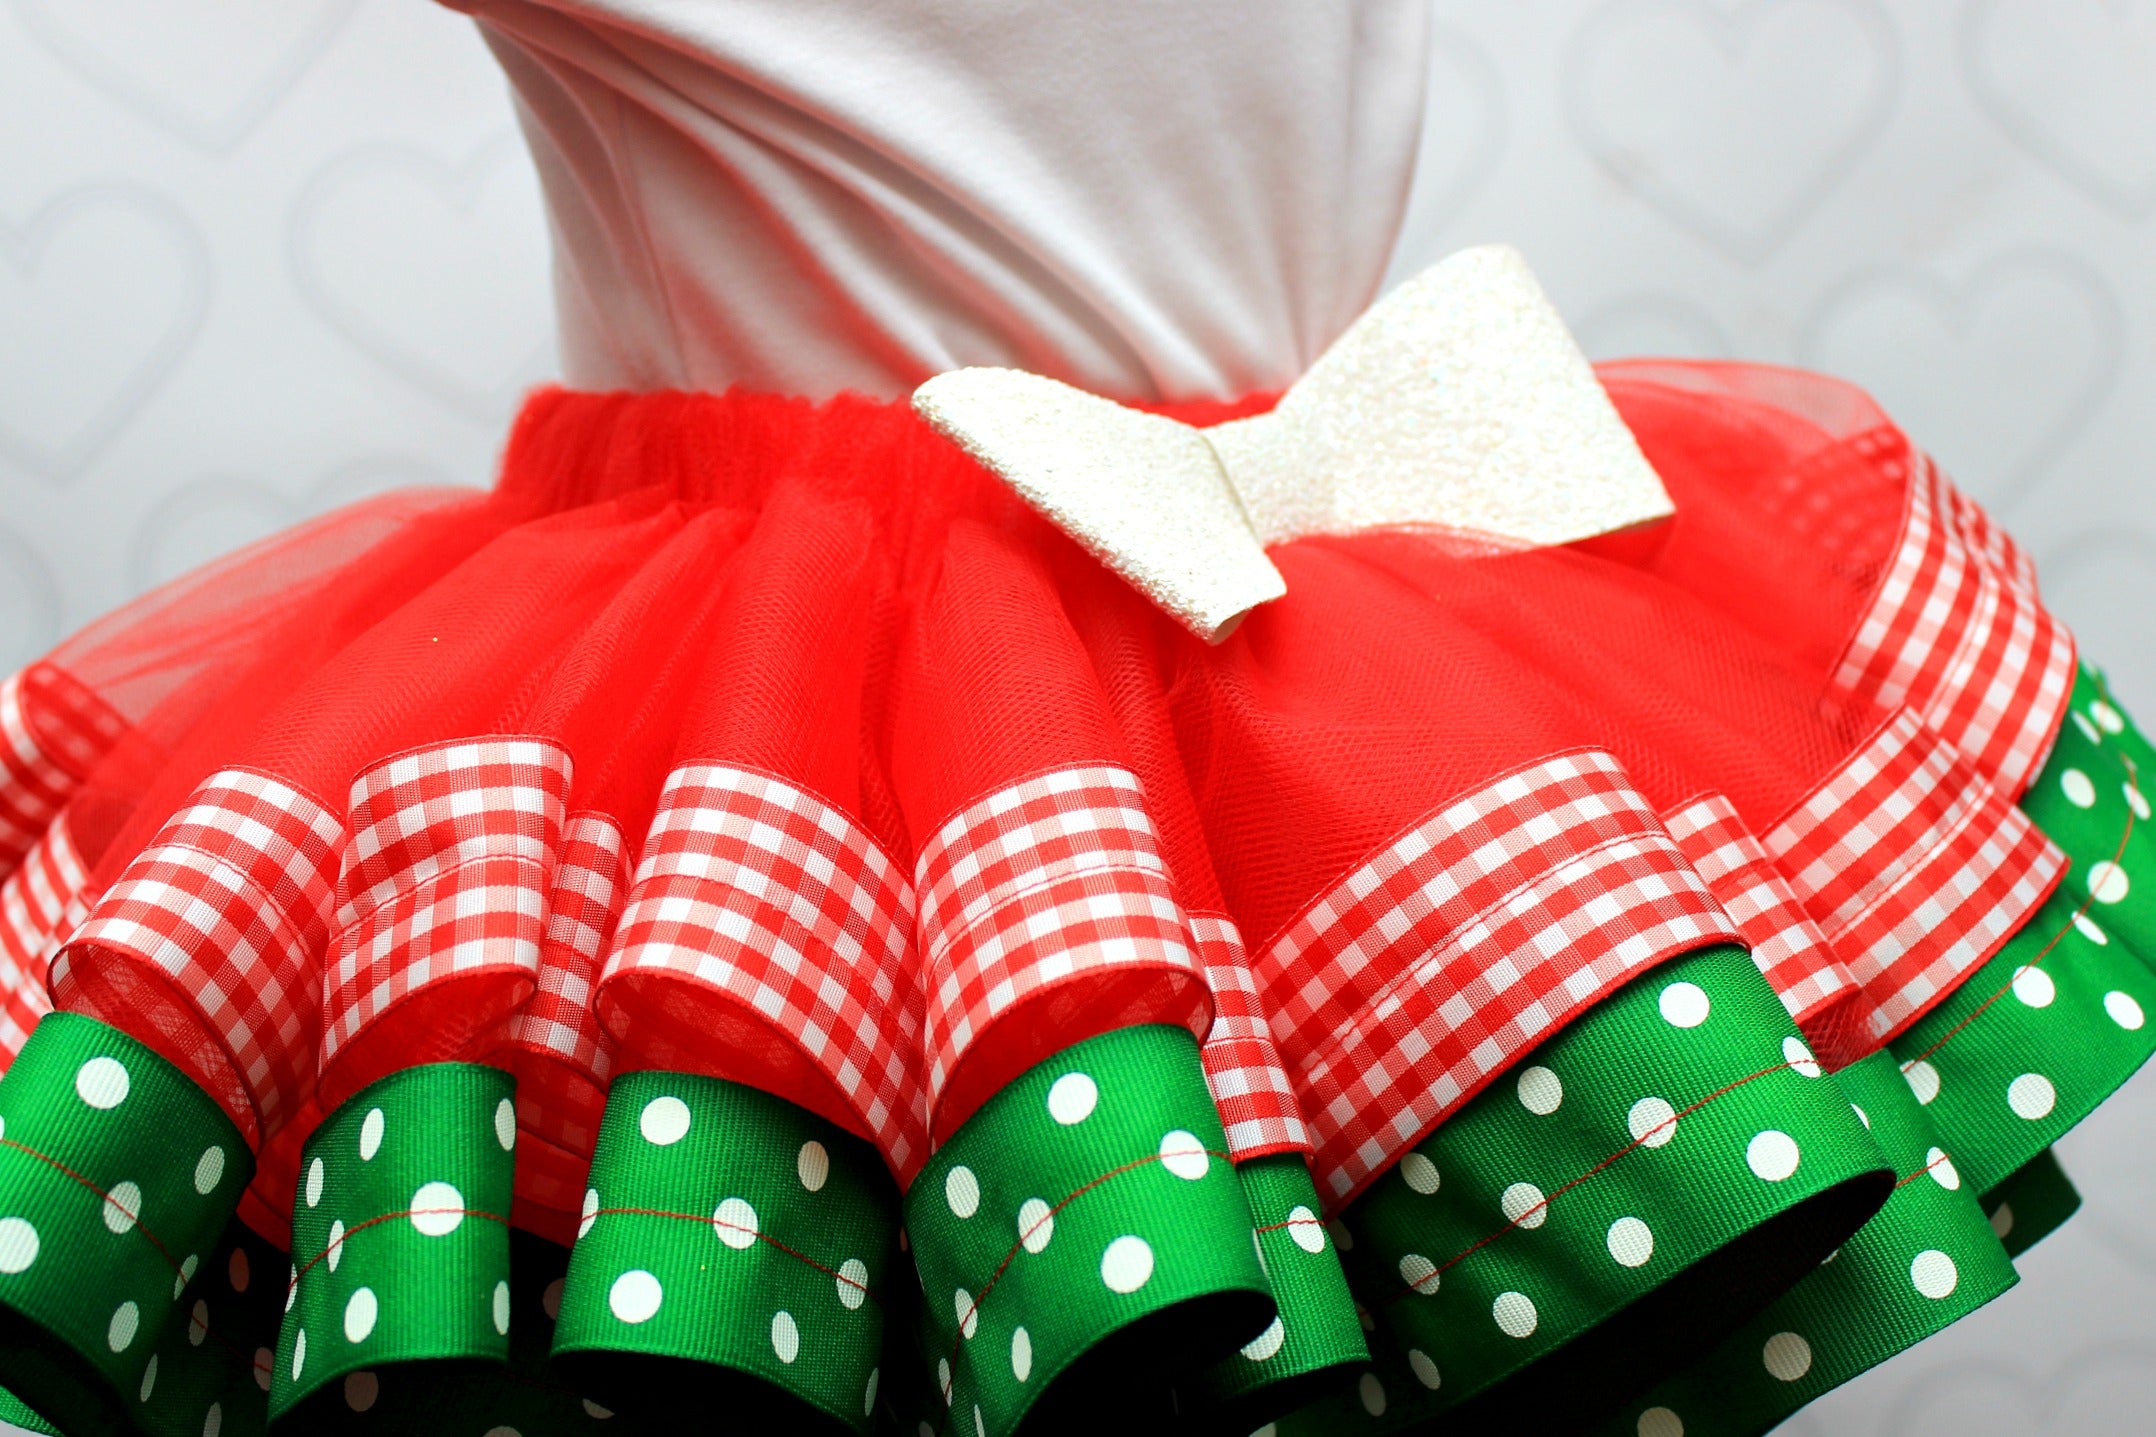 Strawberry tutu set-Strawberry outfit-Strawberry dress